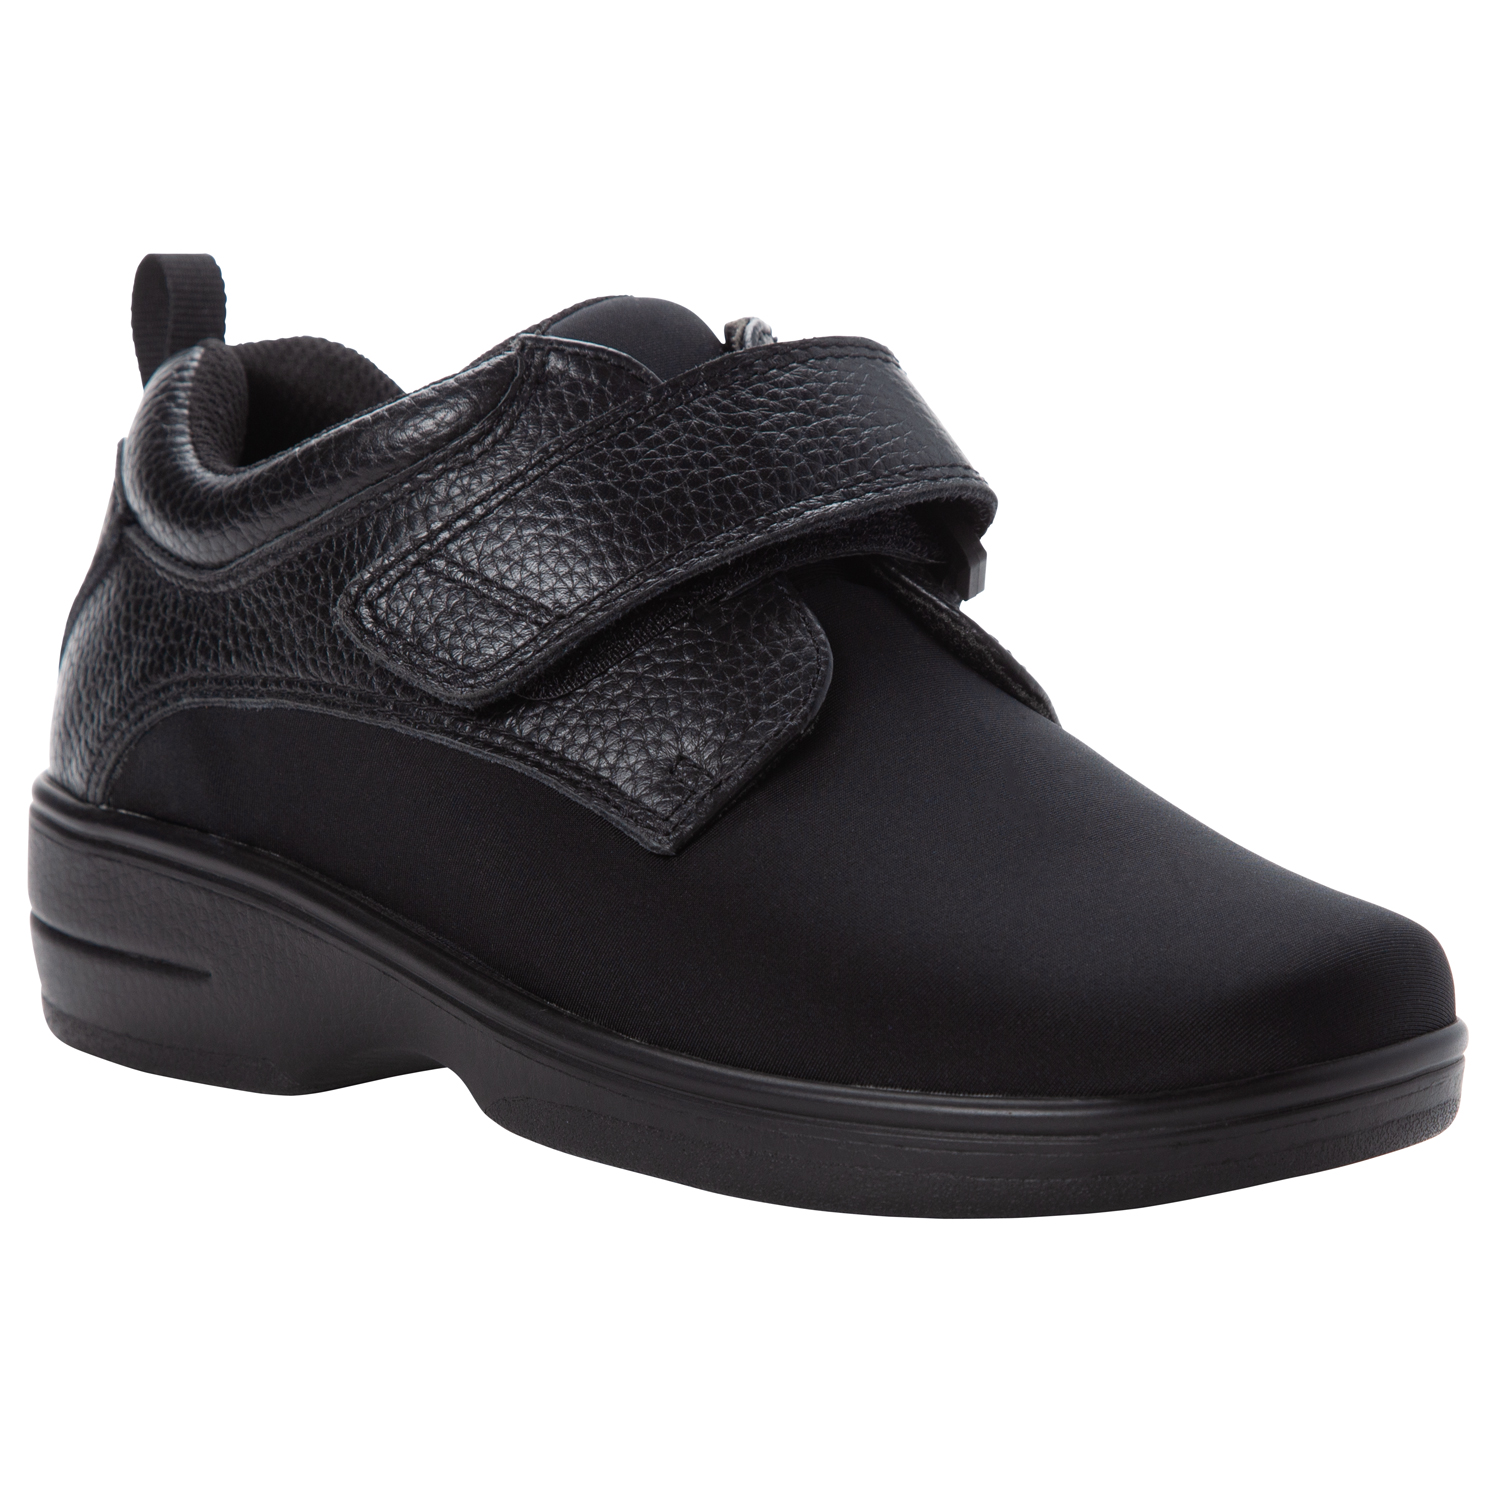 Propet Mens  Black Strap Closure  Comfort,Walking shoe 13  M -FREE SHIPPING